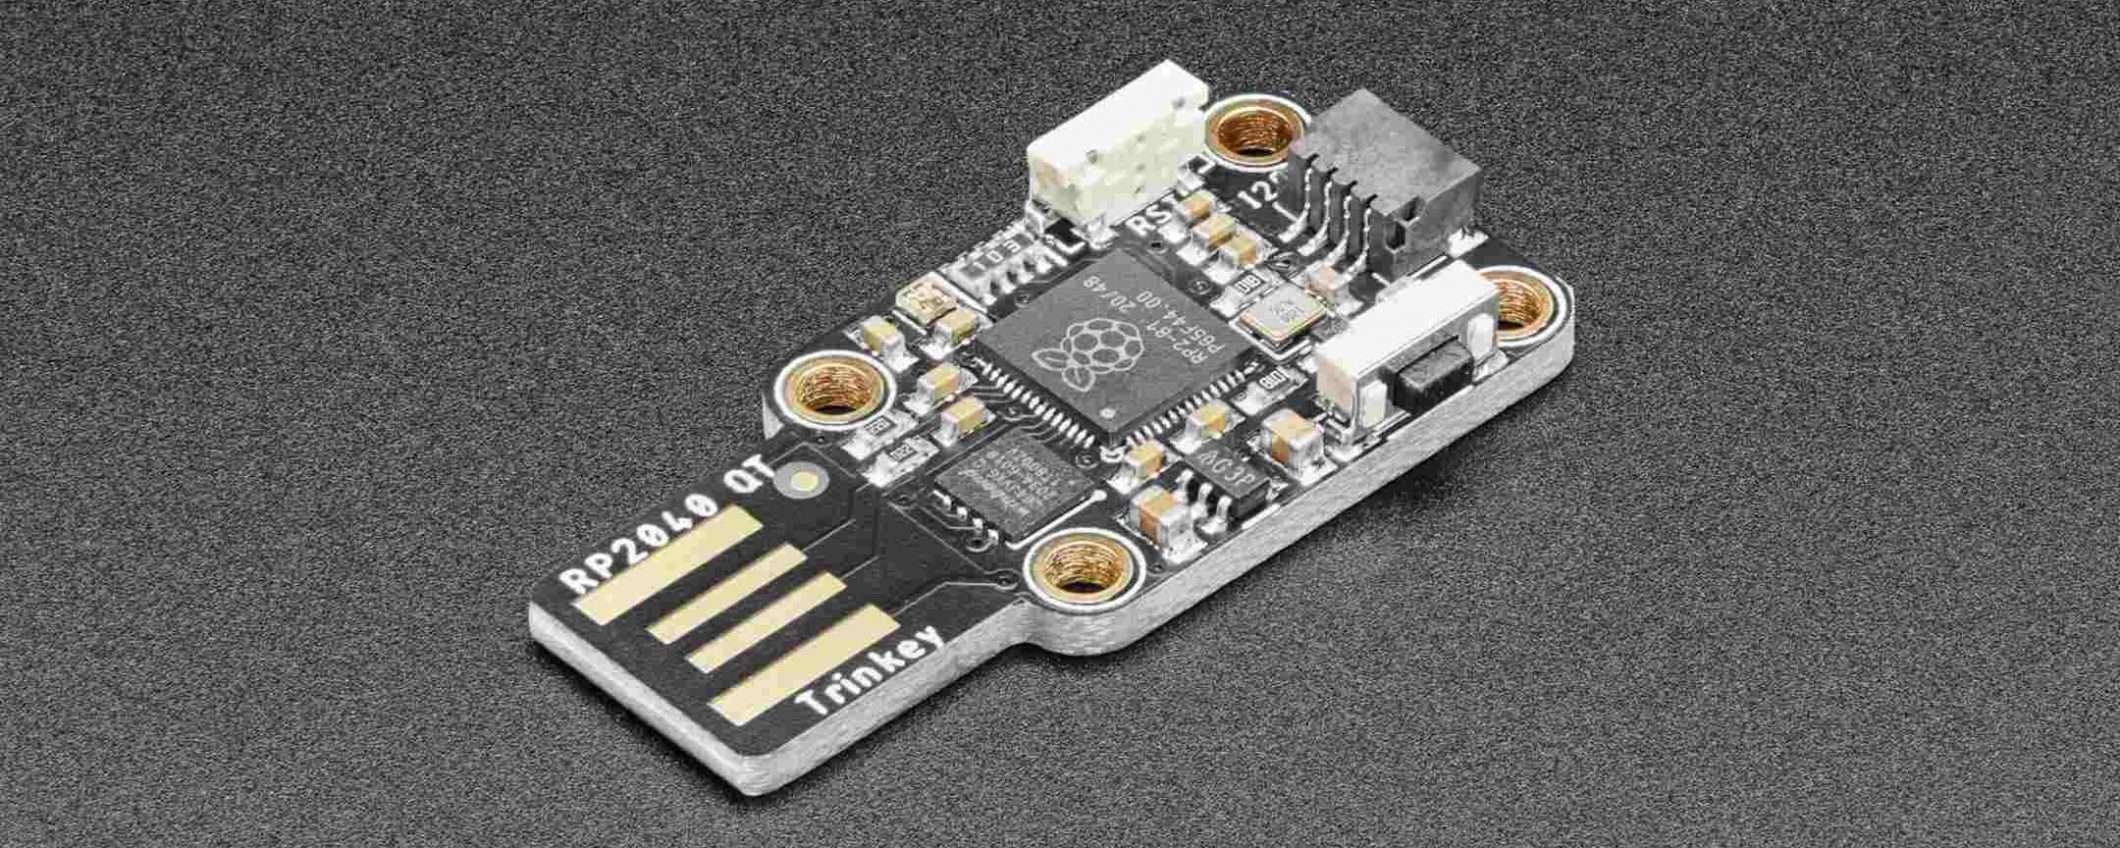 Adafruit Trinkey QT2040: board con USB Type-A